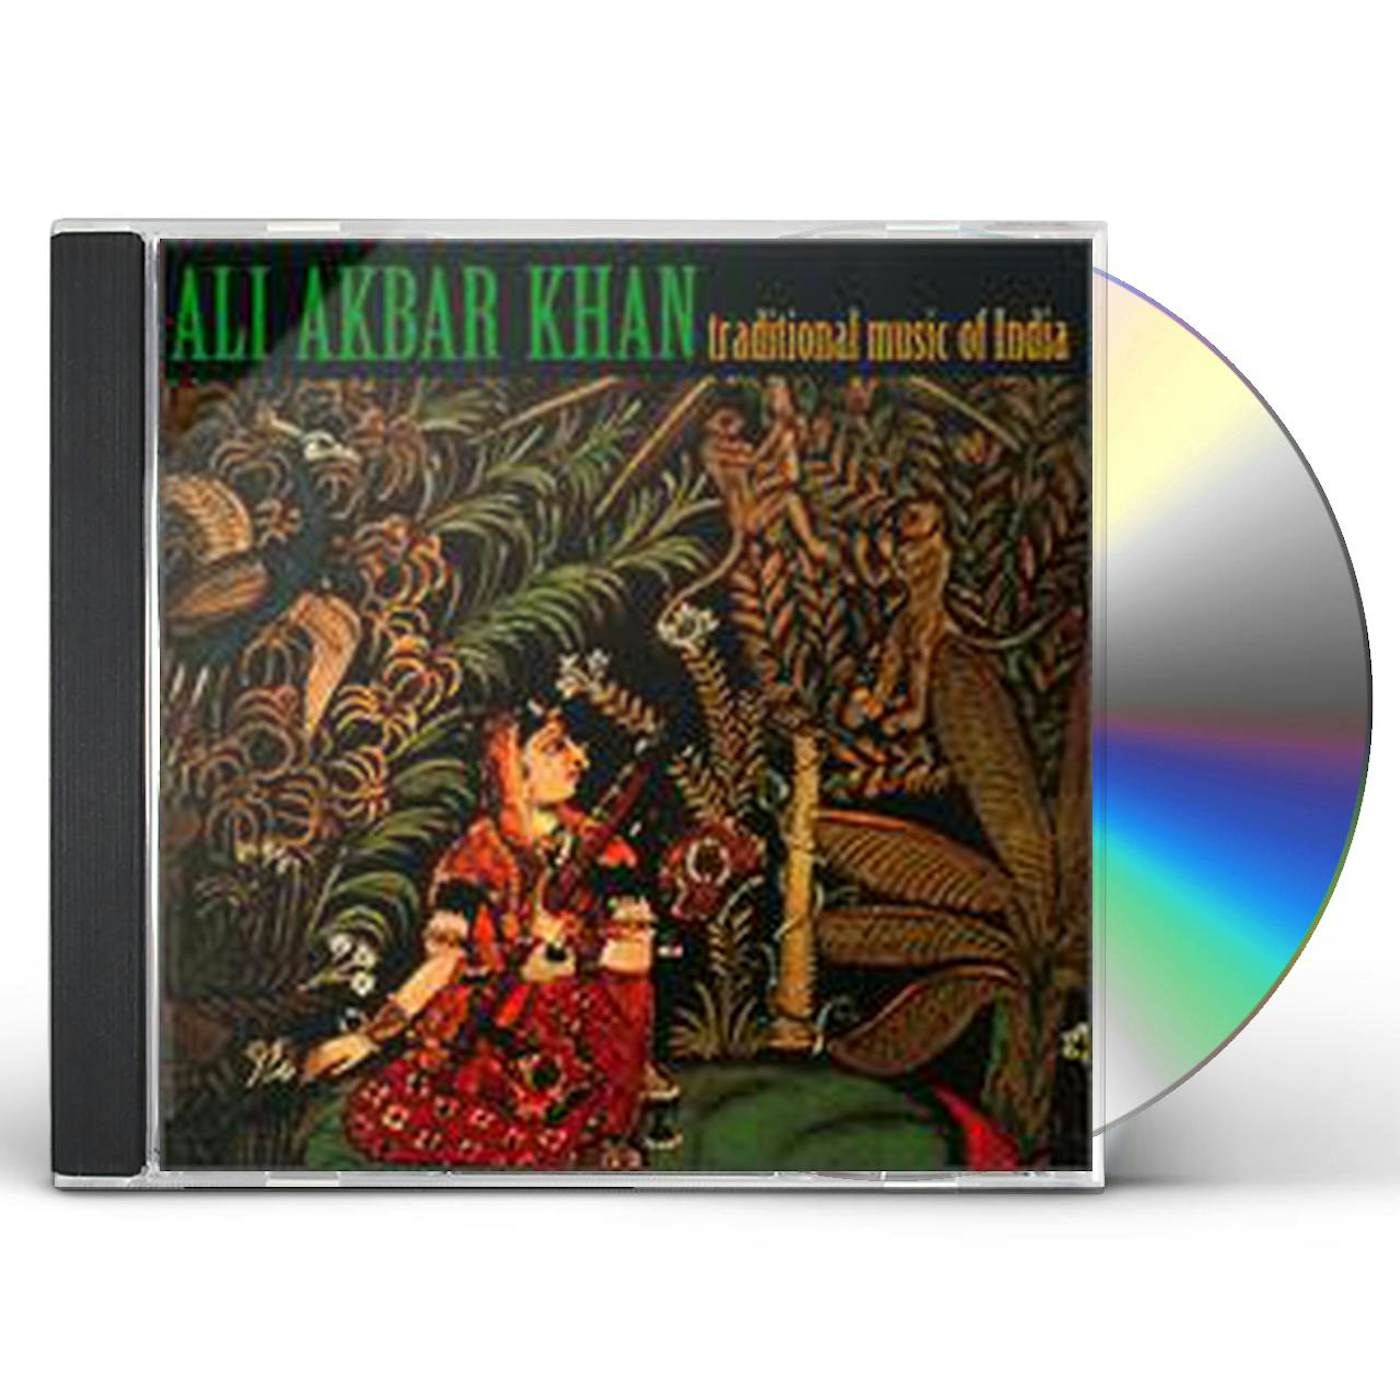 Ali Akbar Khan TRADITIONAL MUSIC OF INDIA CD